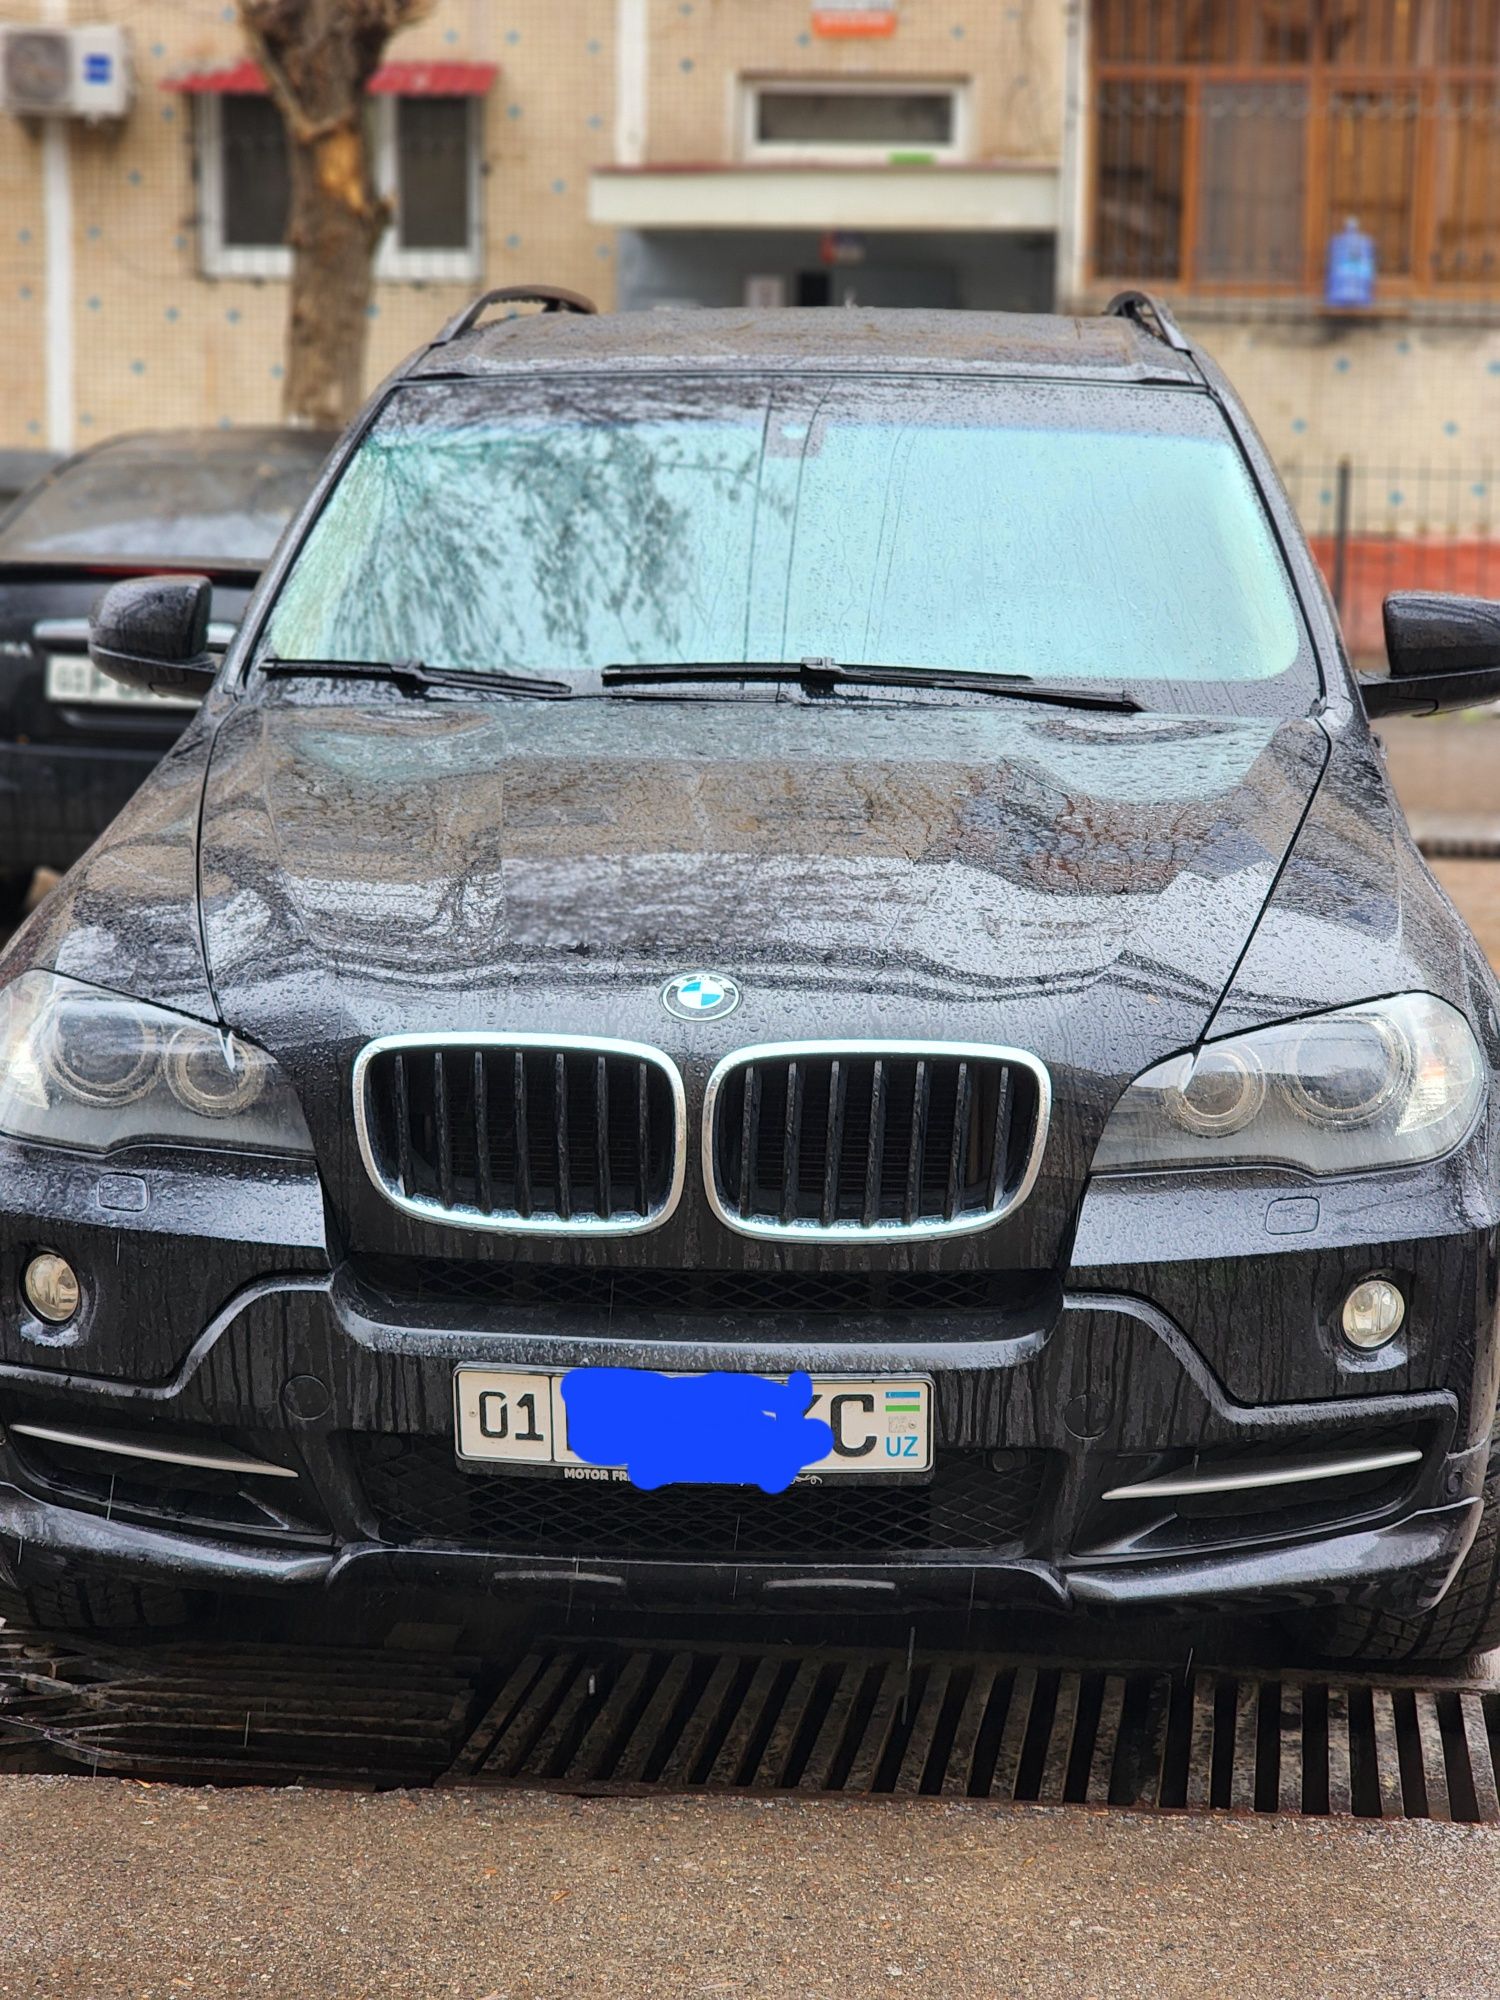 BMW X 5. 2008г Е70 2.5 л Holati zo‘r. .